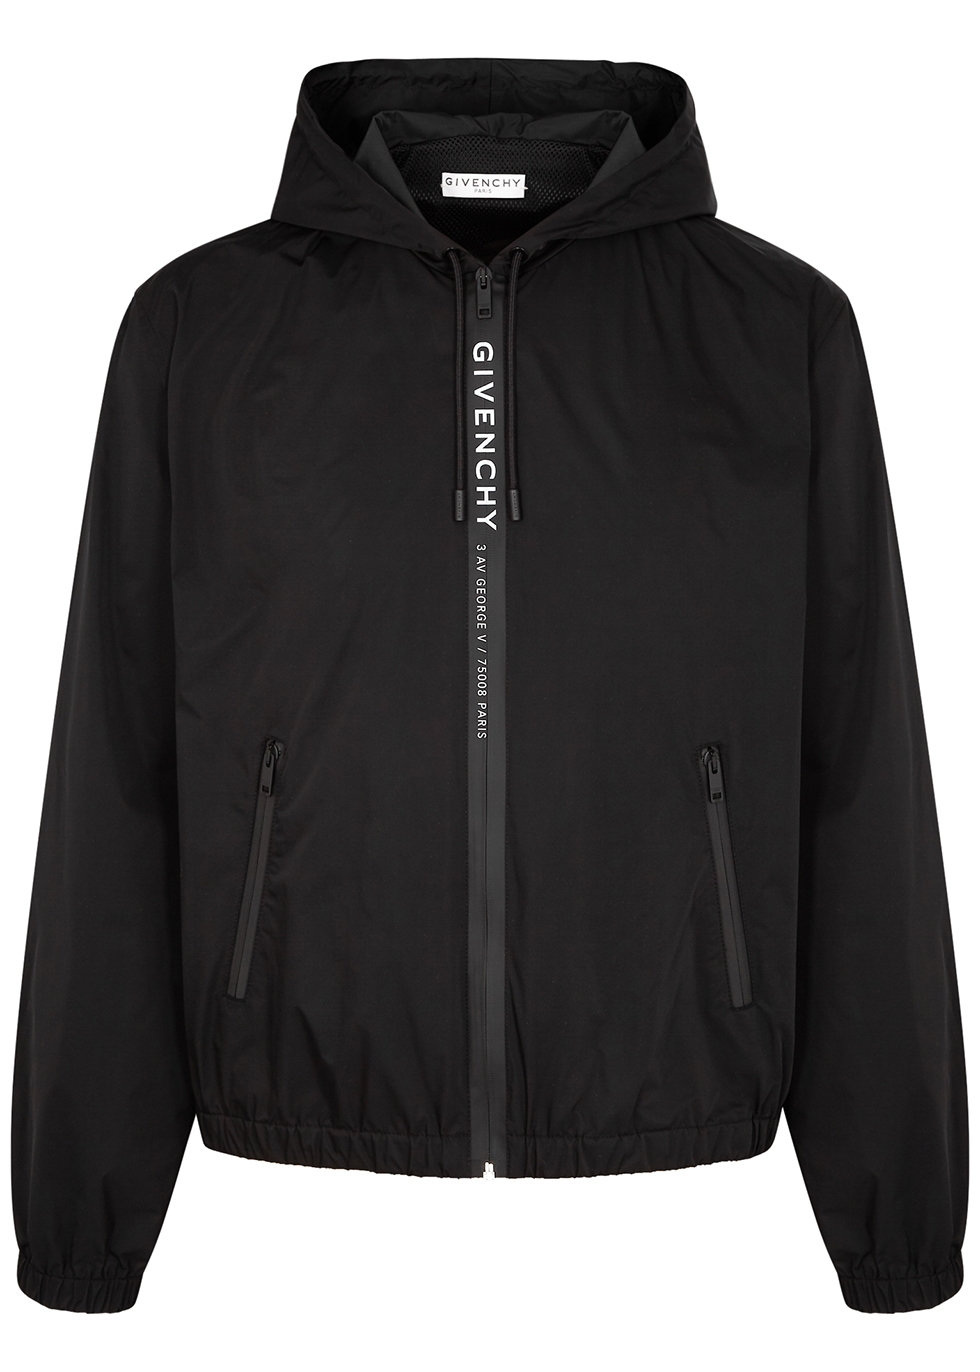 Givenchy Black logo shell jacket 